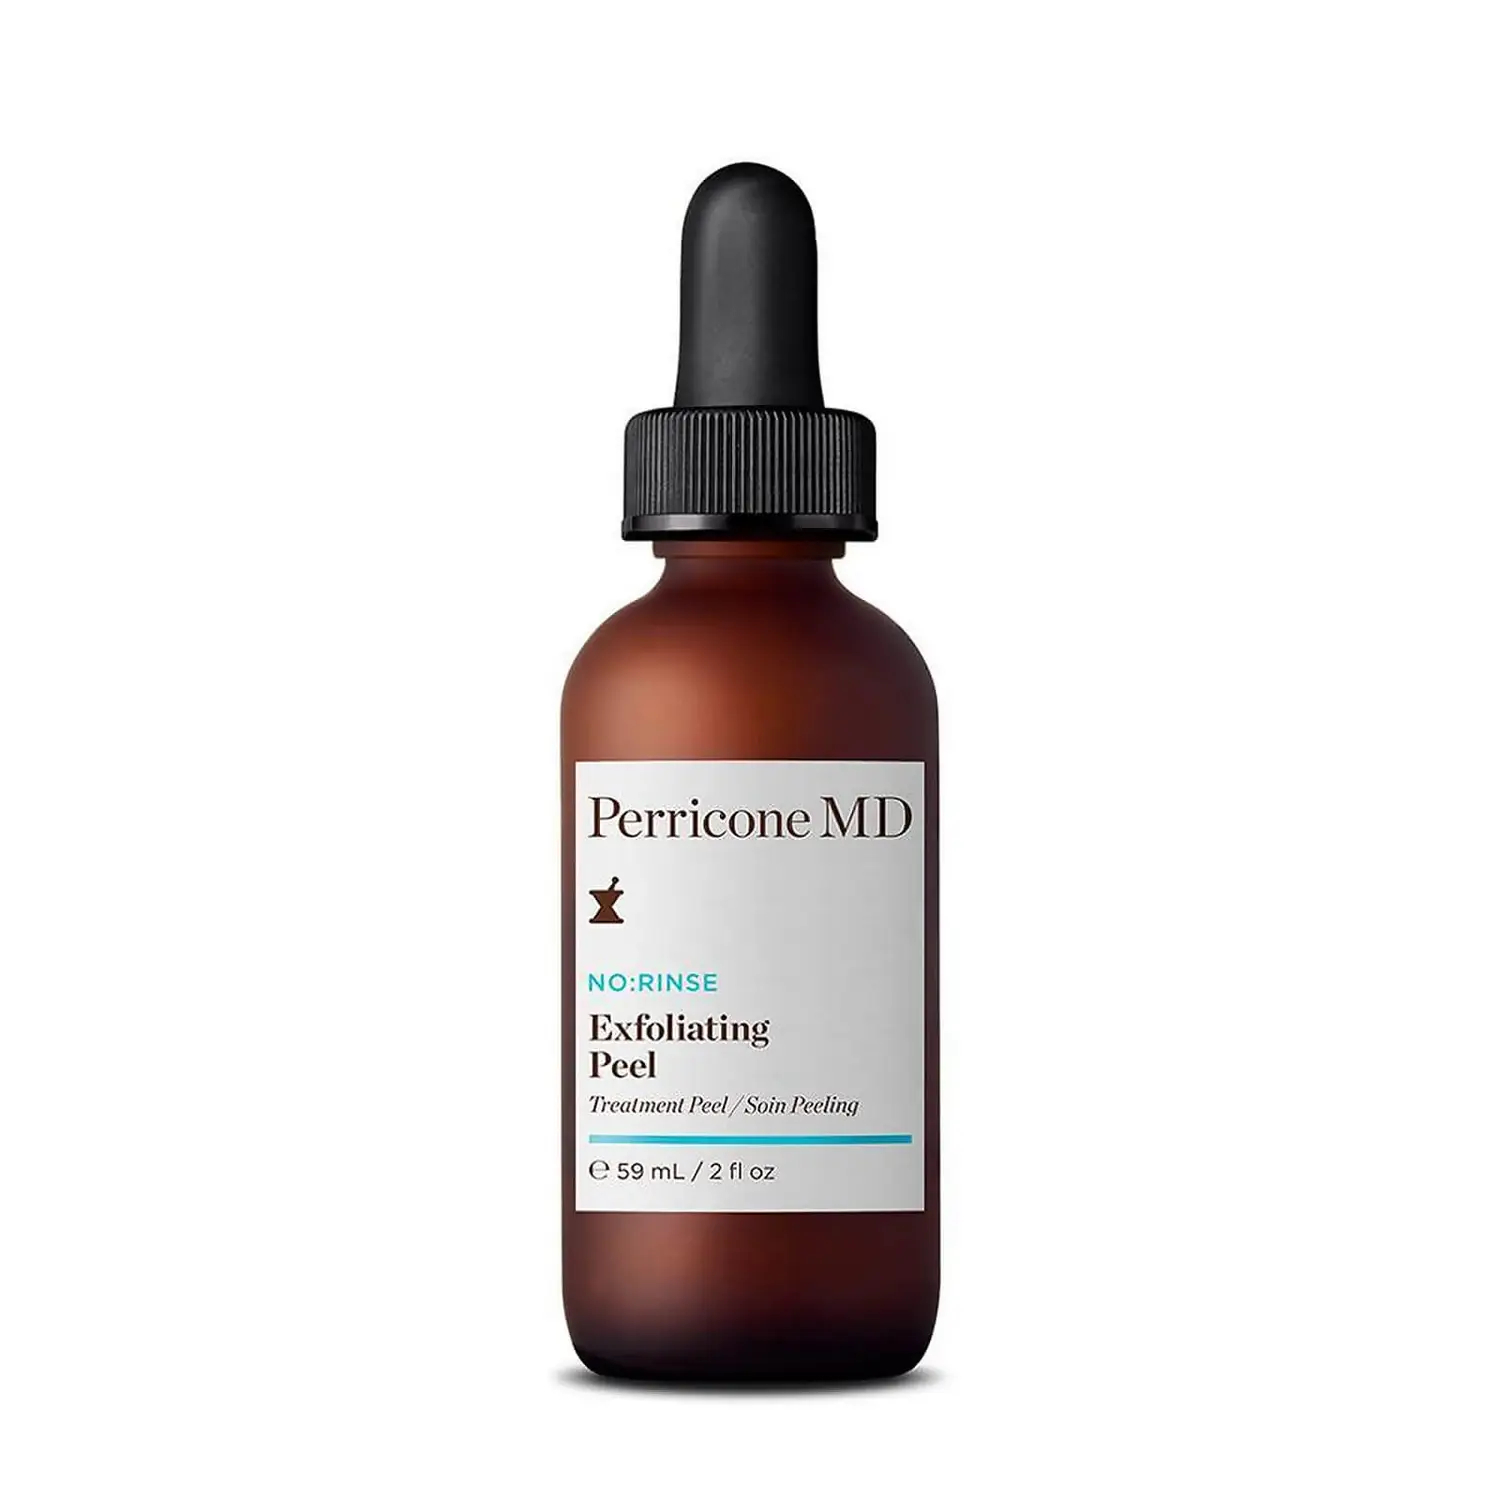 No:Rinse Exfoliating Peel Perricone MD 59ml